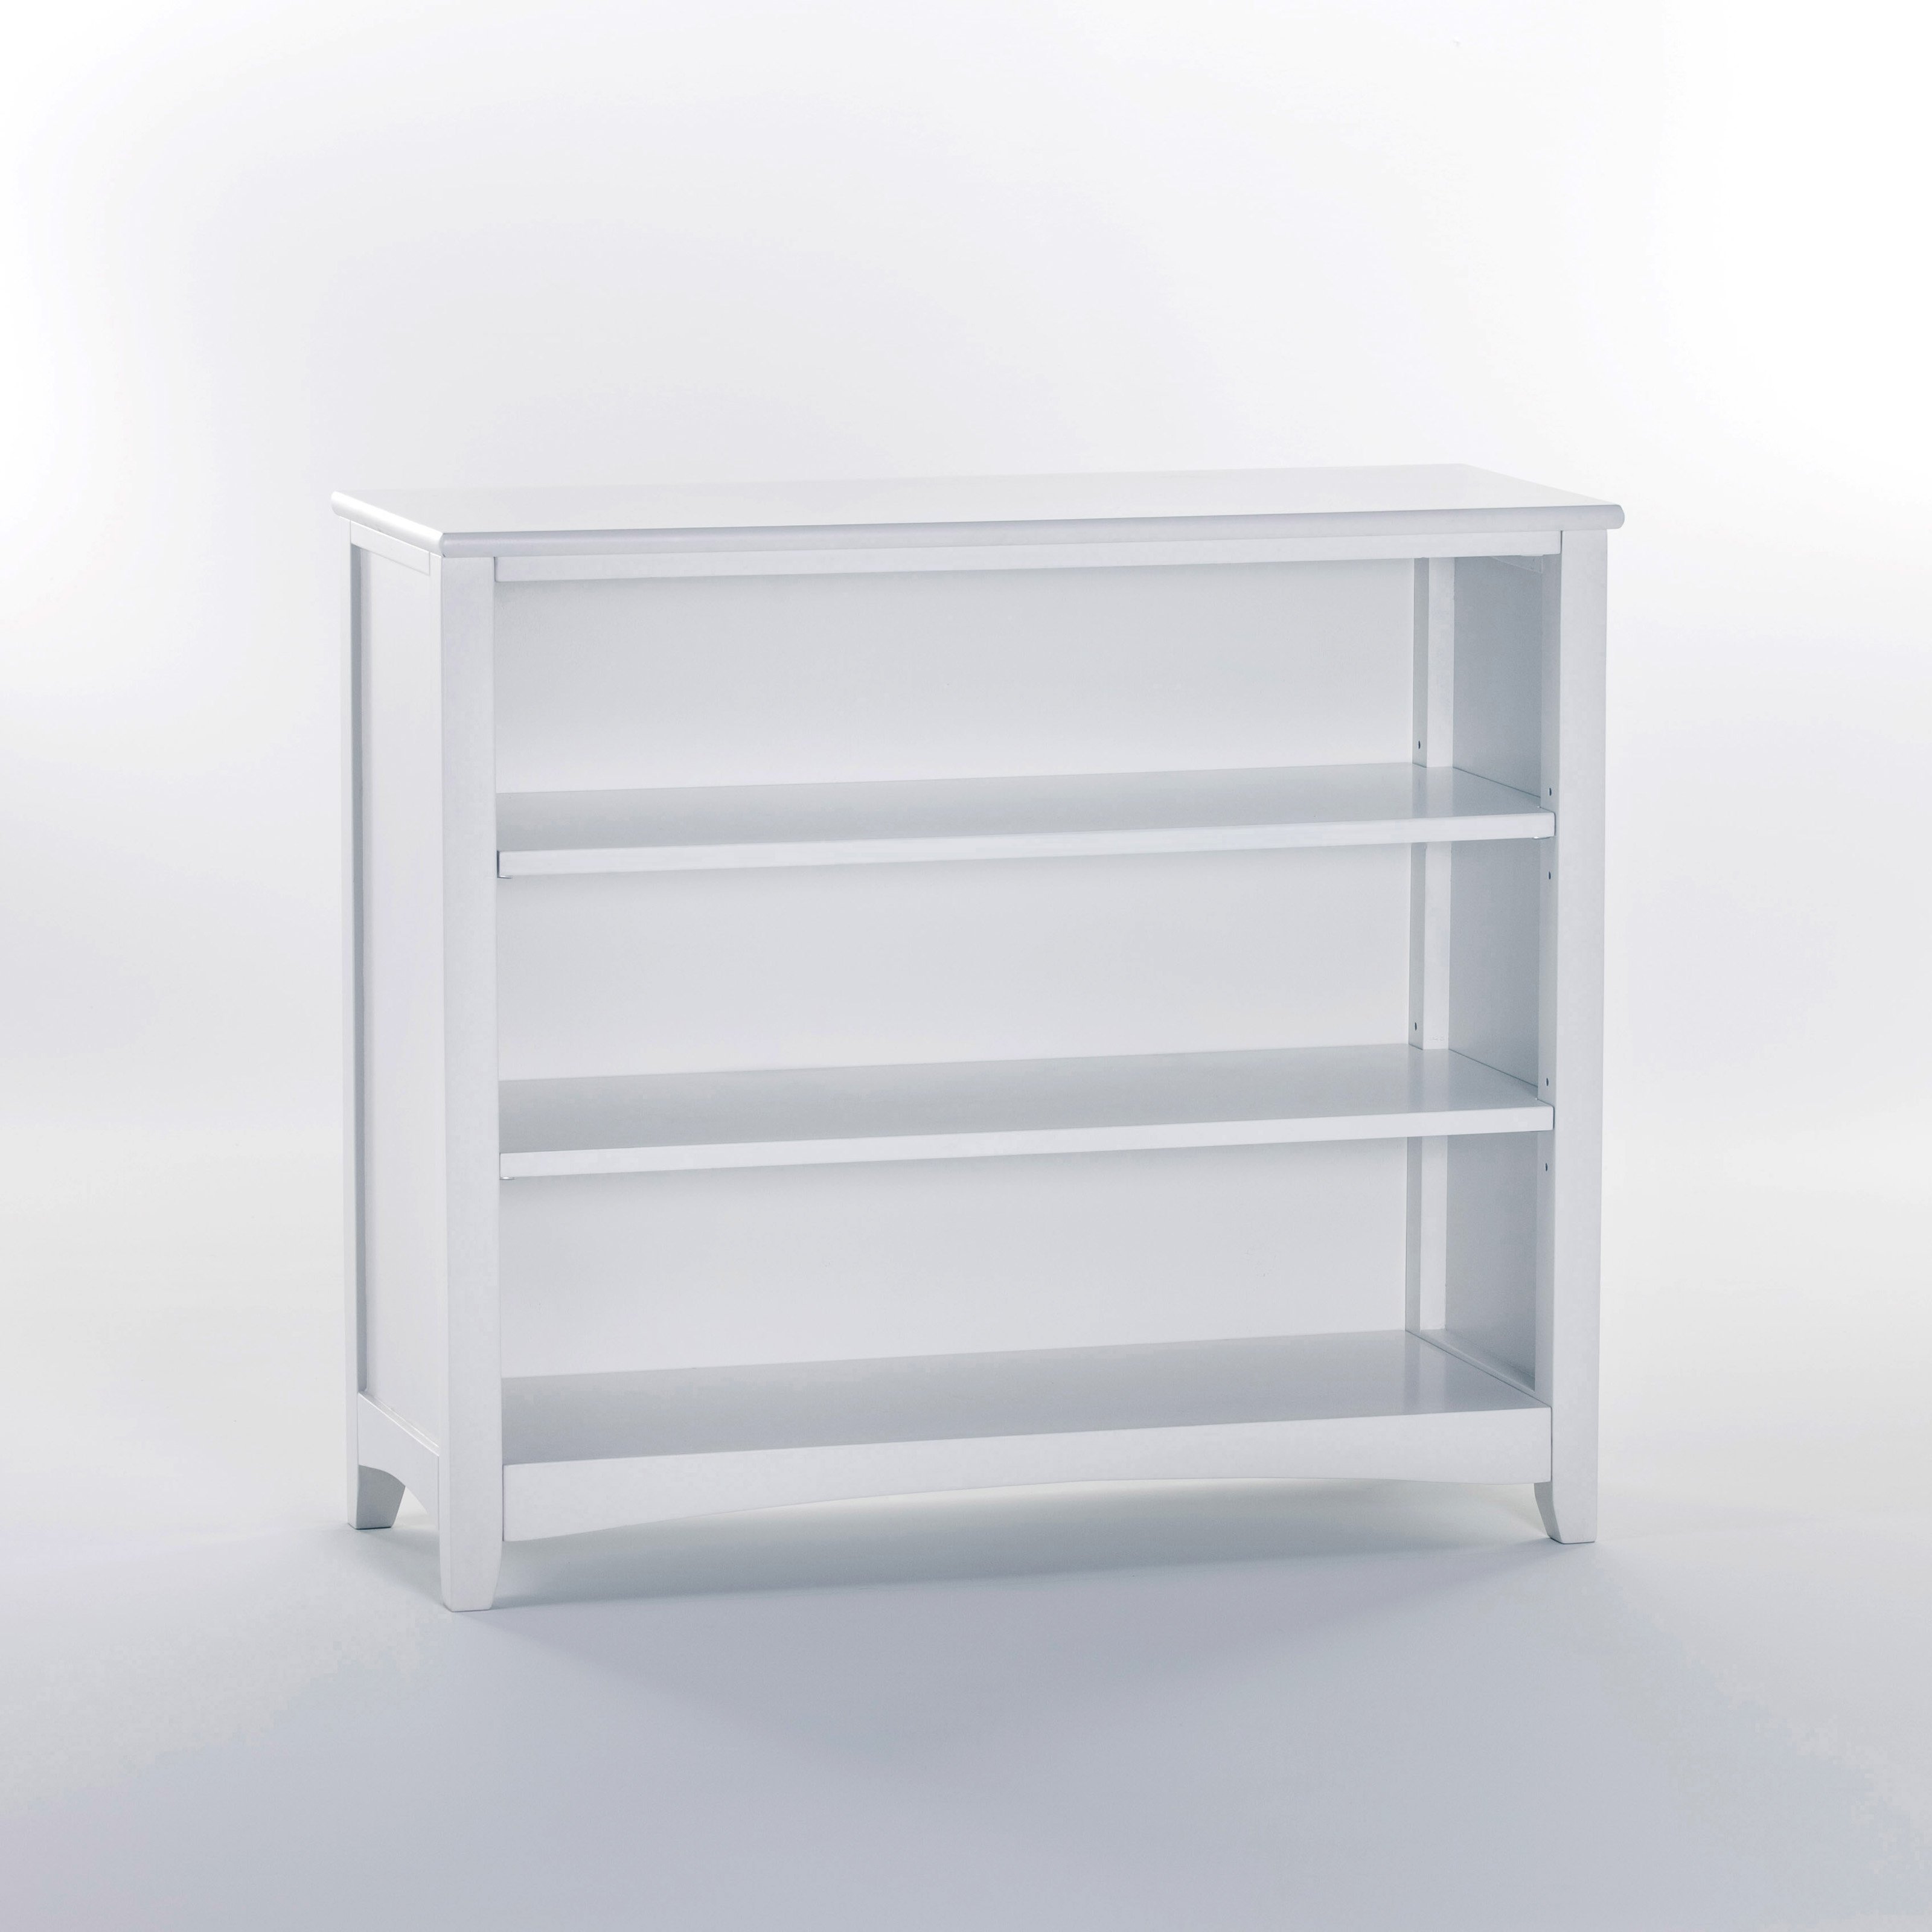 white bookshelves schoolhouse horizontal bookshelf - white |  Hayneedle FJCKSMI